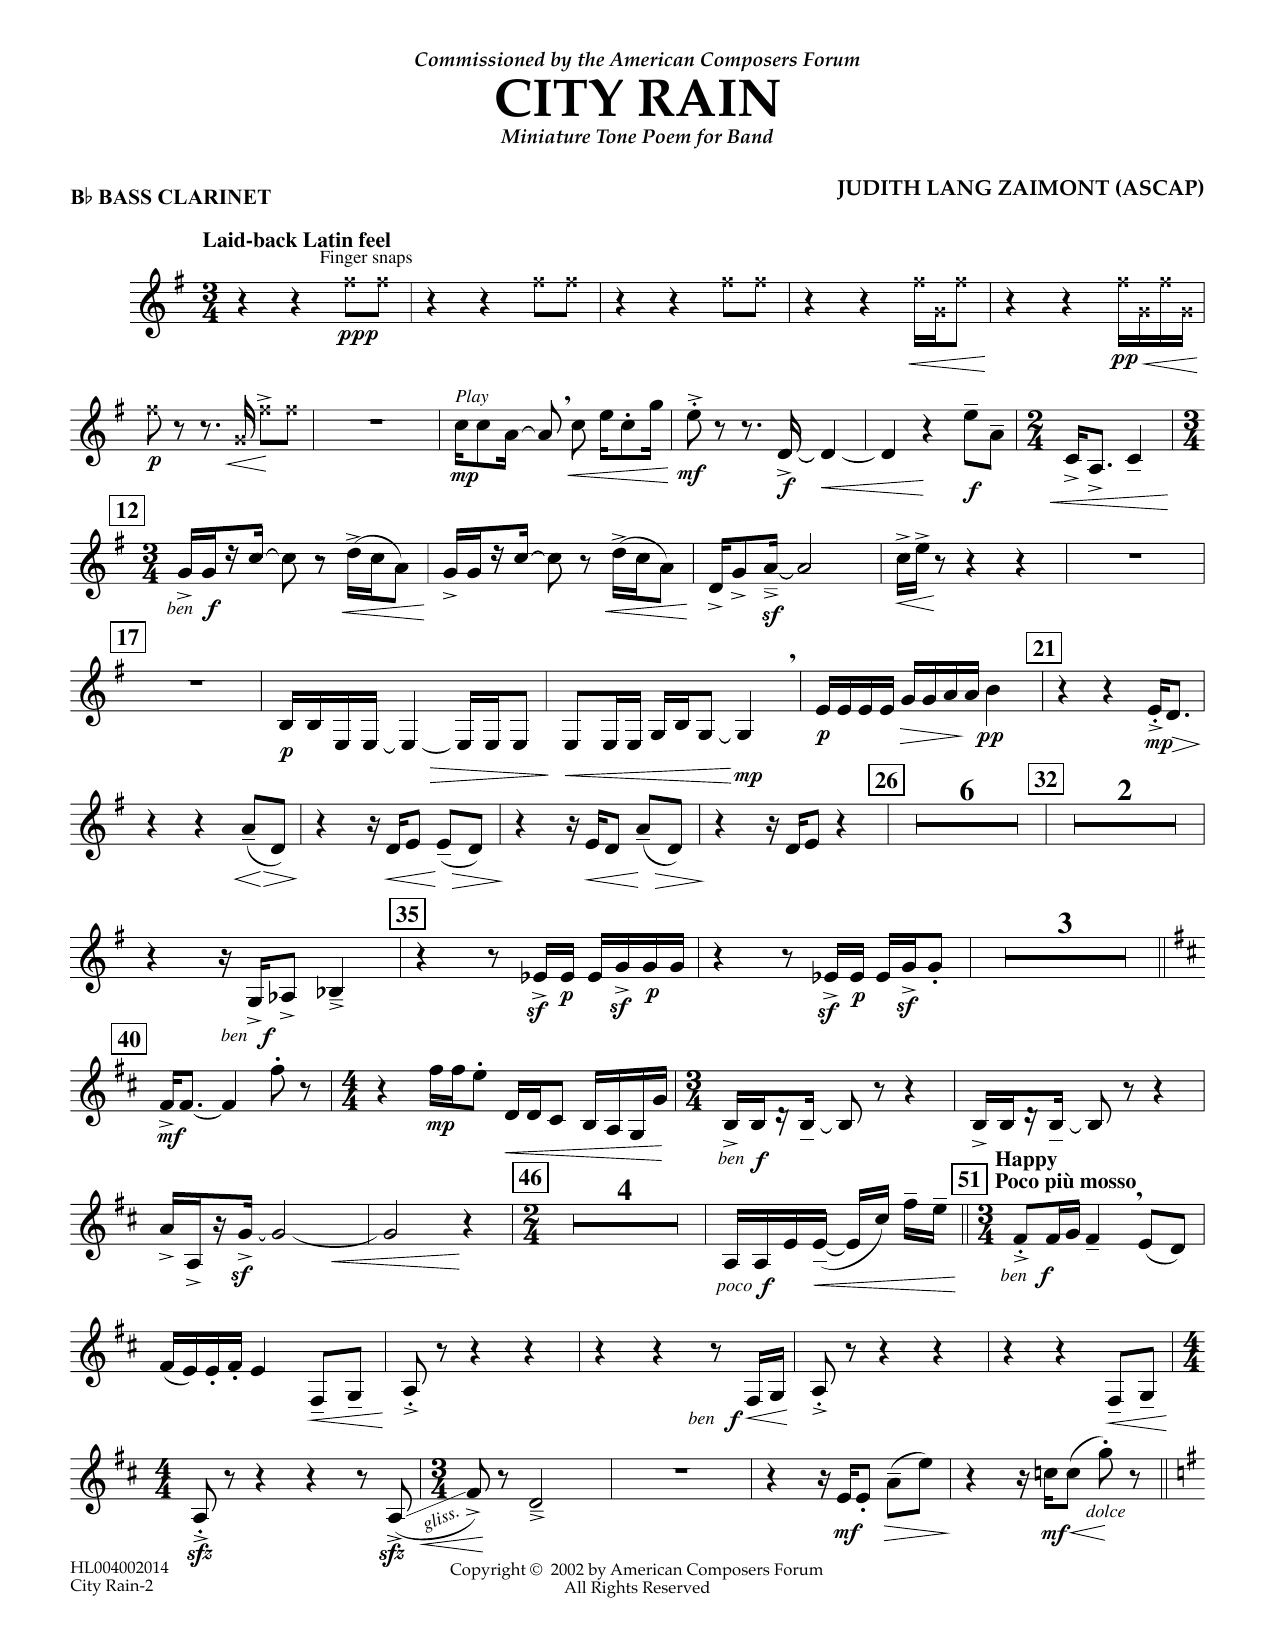 Download Judith Zaimont City Rain - Bb Bass Clarinet Sheet Music